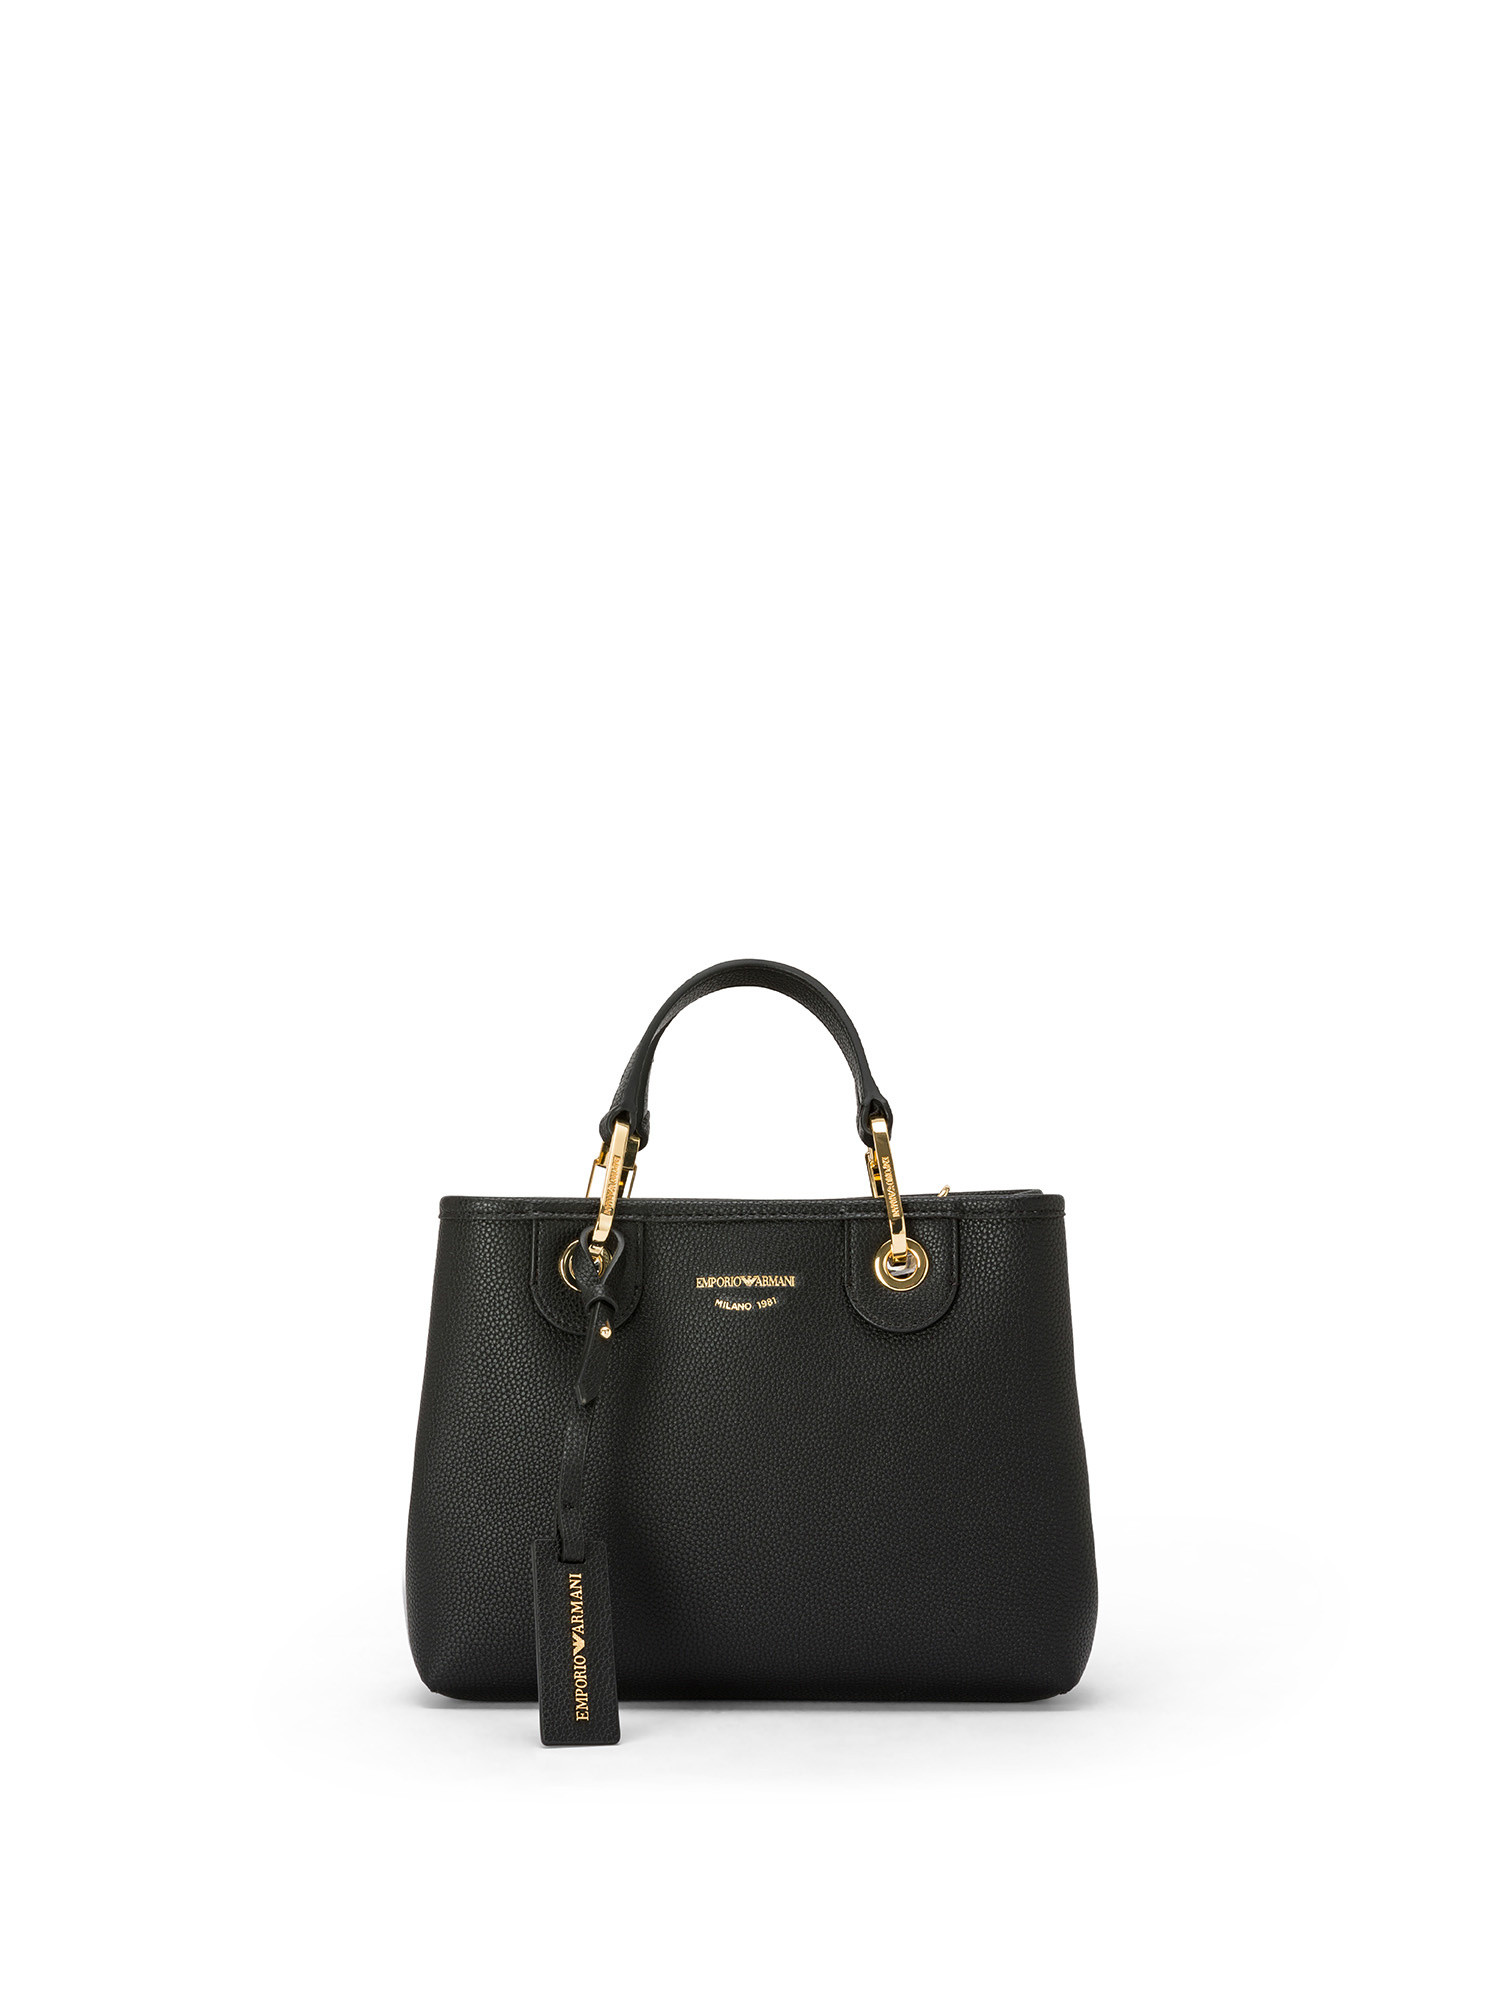 Emporio Armani - Small handbag with deer print, Black, large image number 0